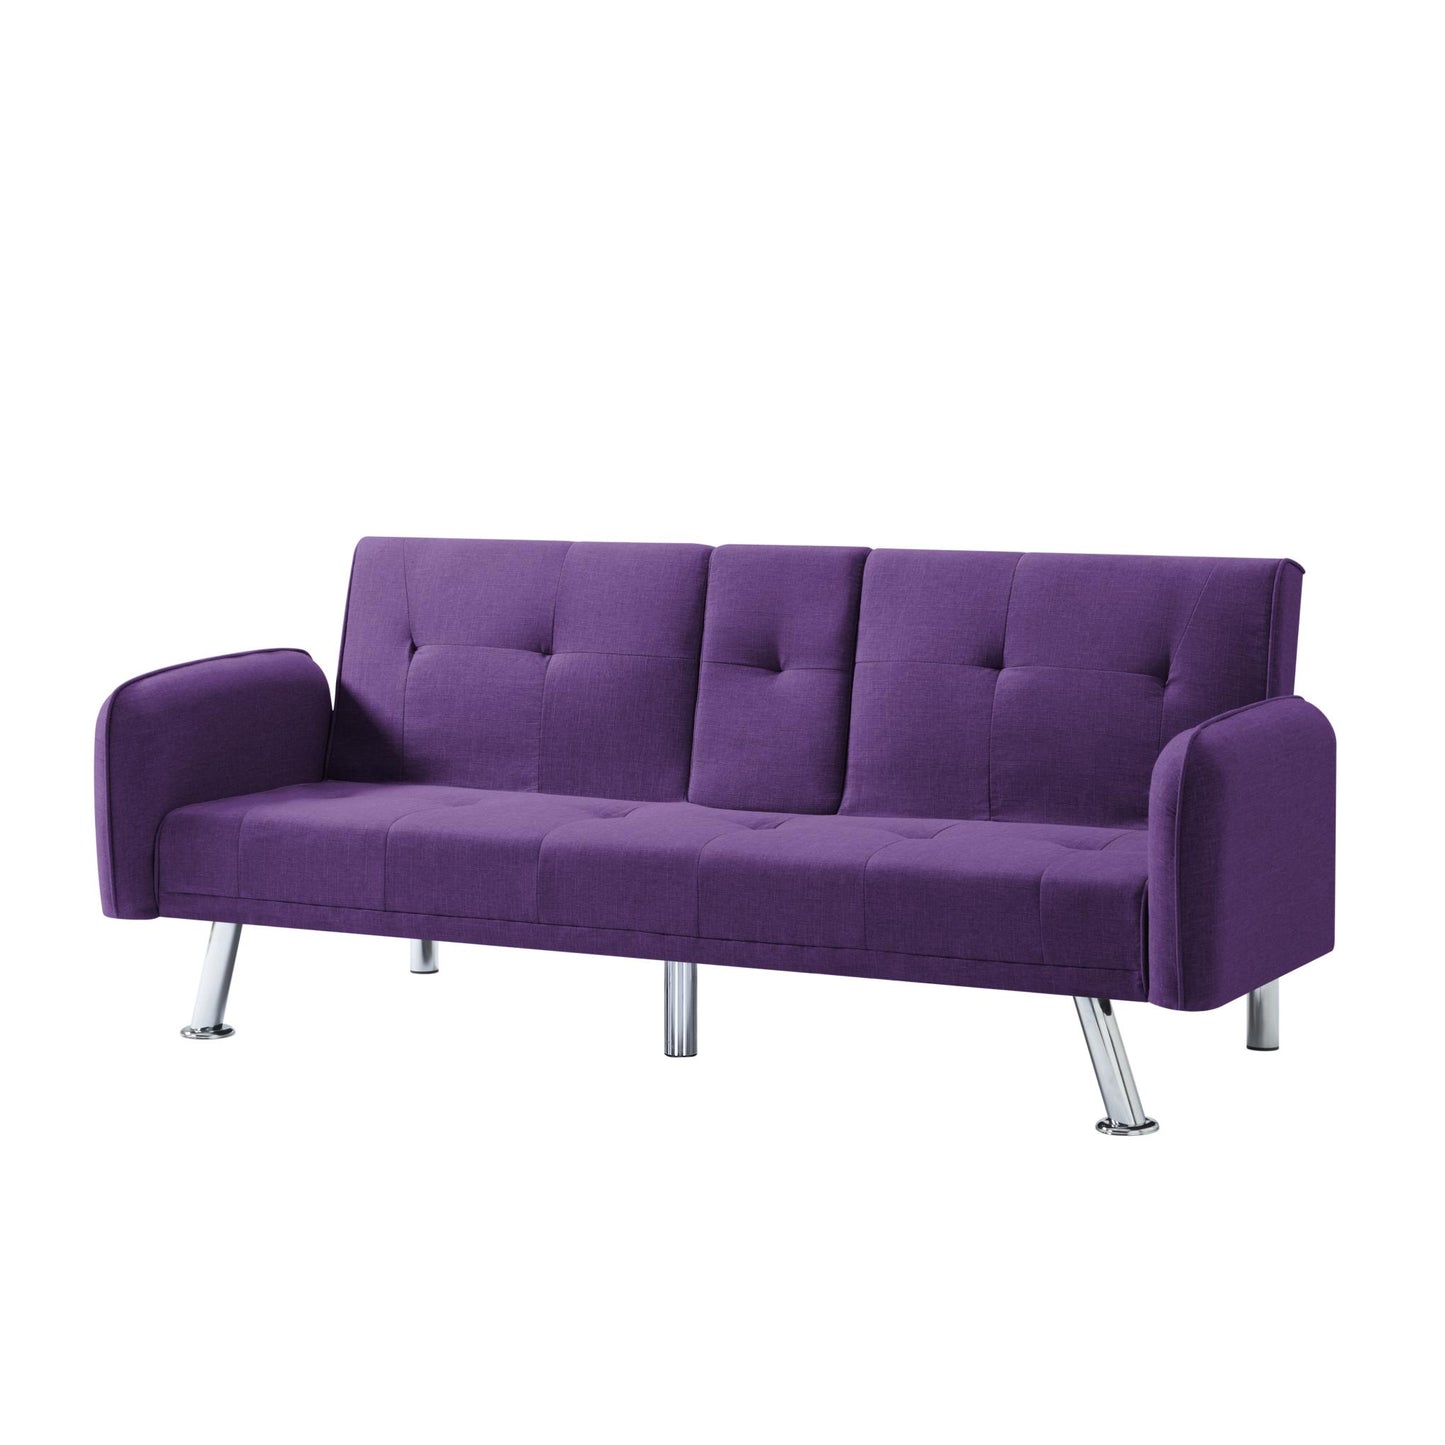 74.8” Futon sleeper sofa bed（With center steel leg）